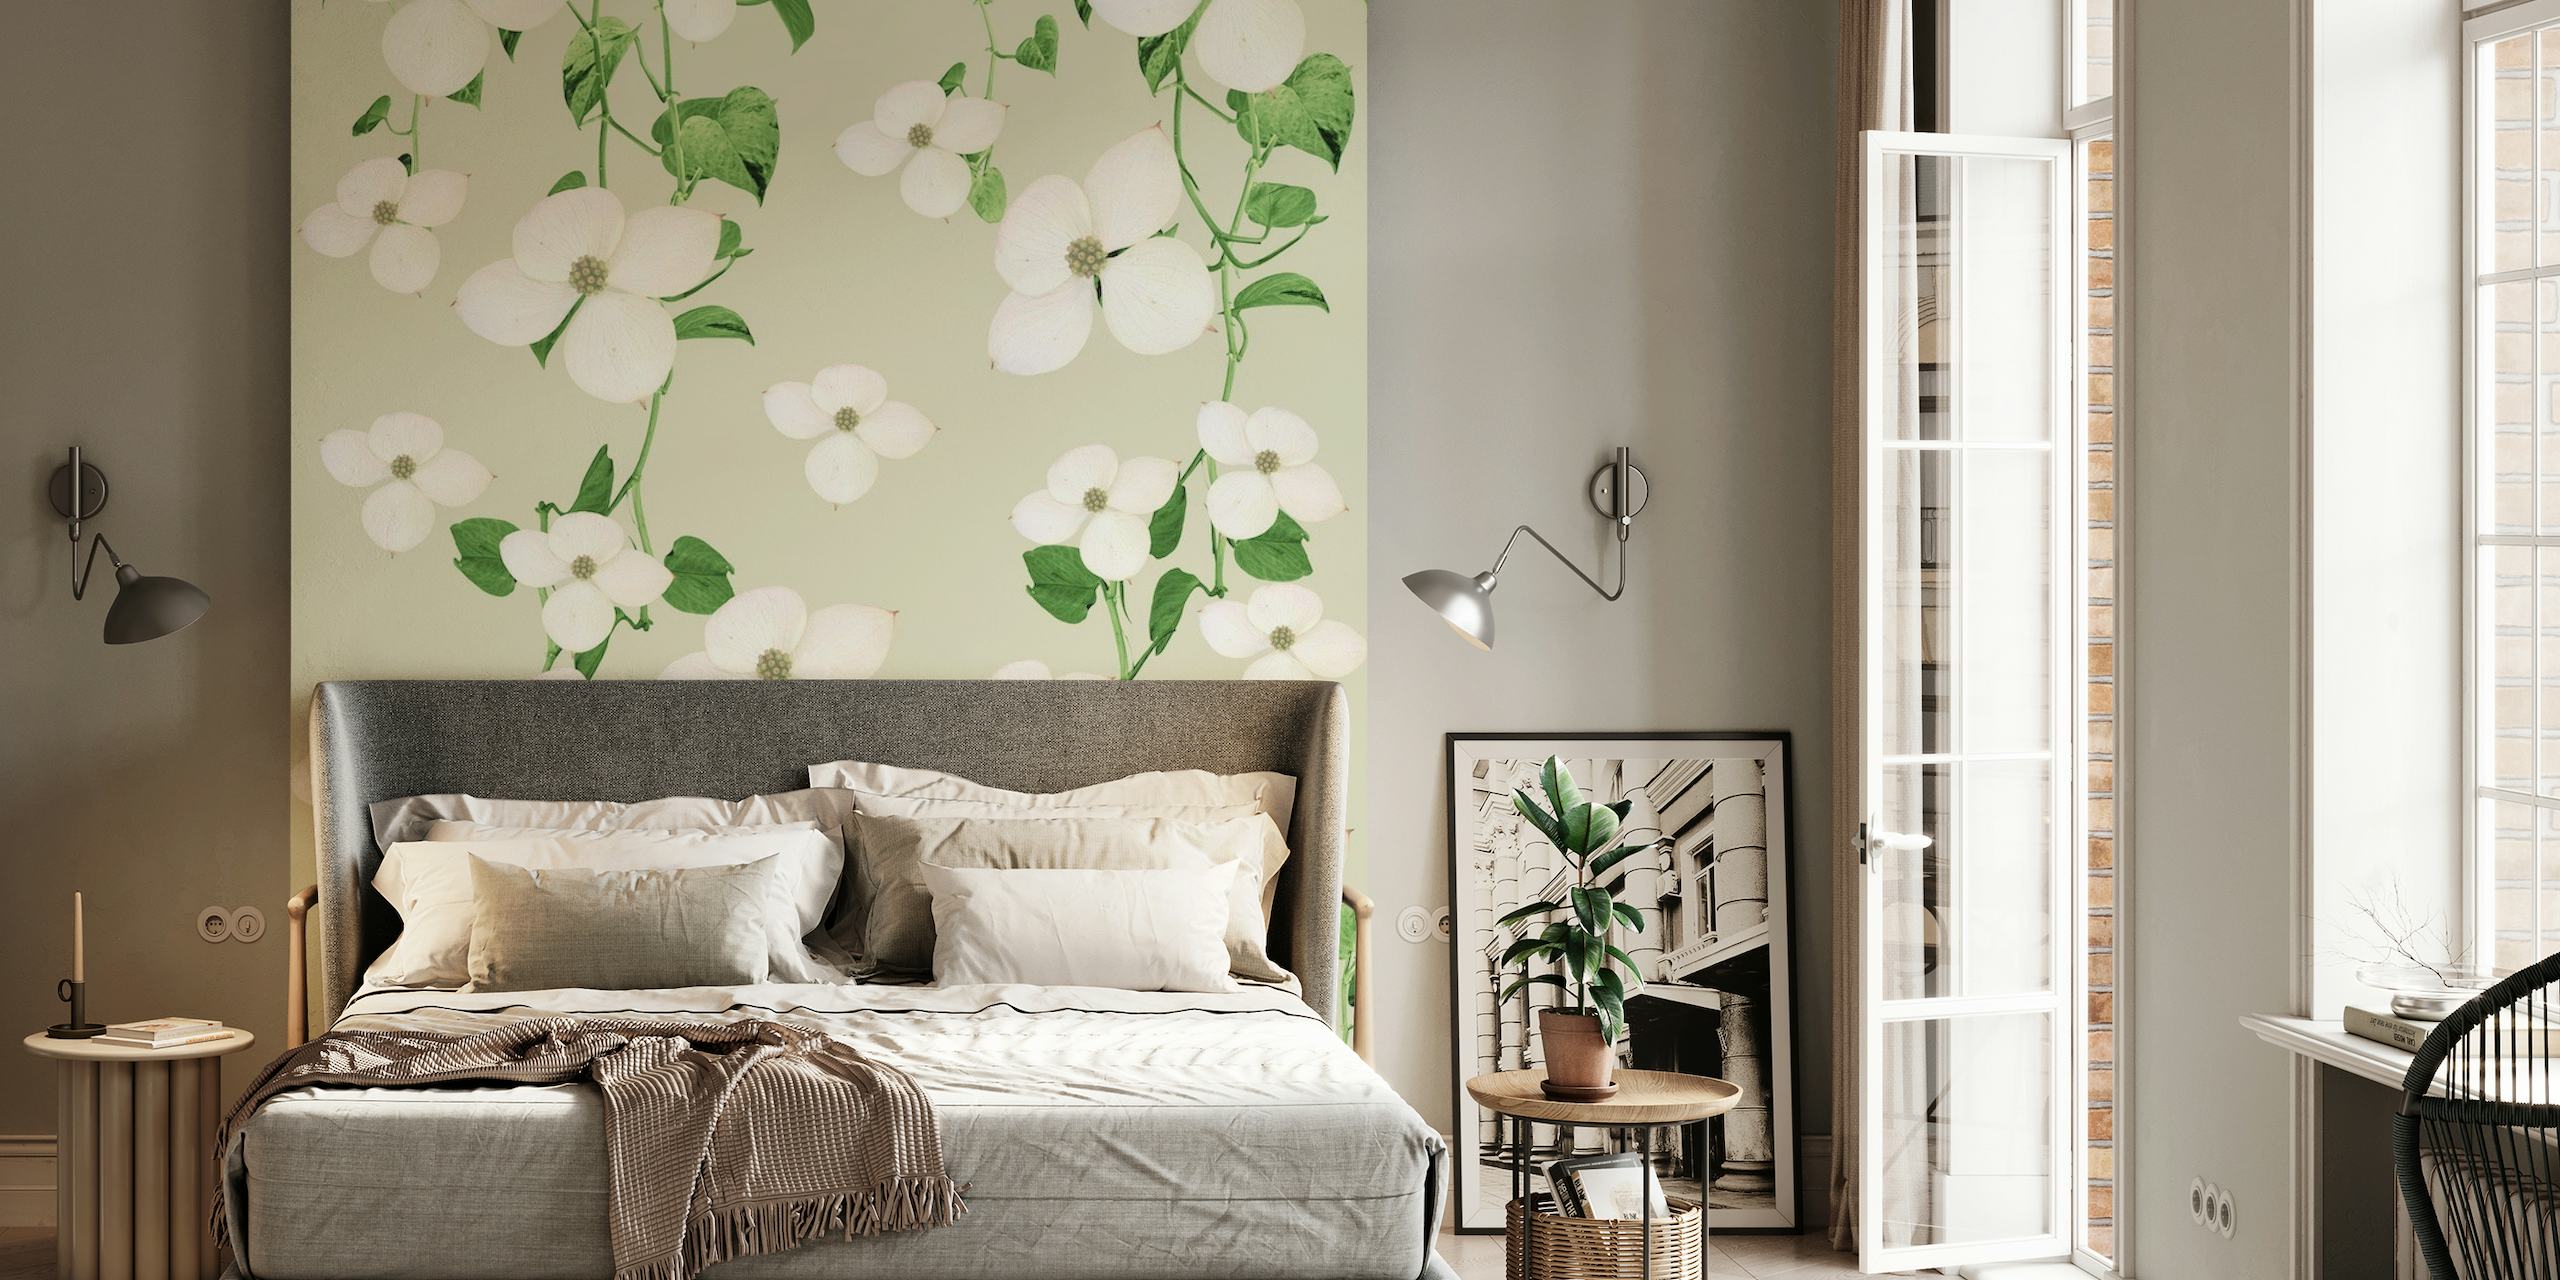 Golden Pothos Ivy Flower 1 wallpaper